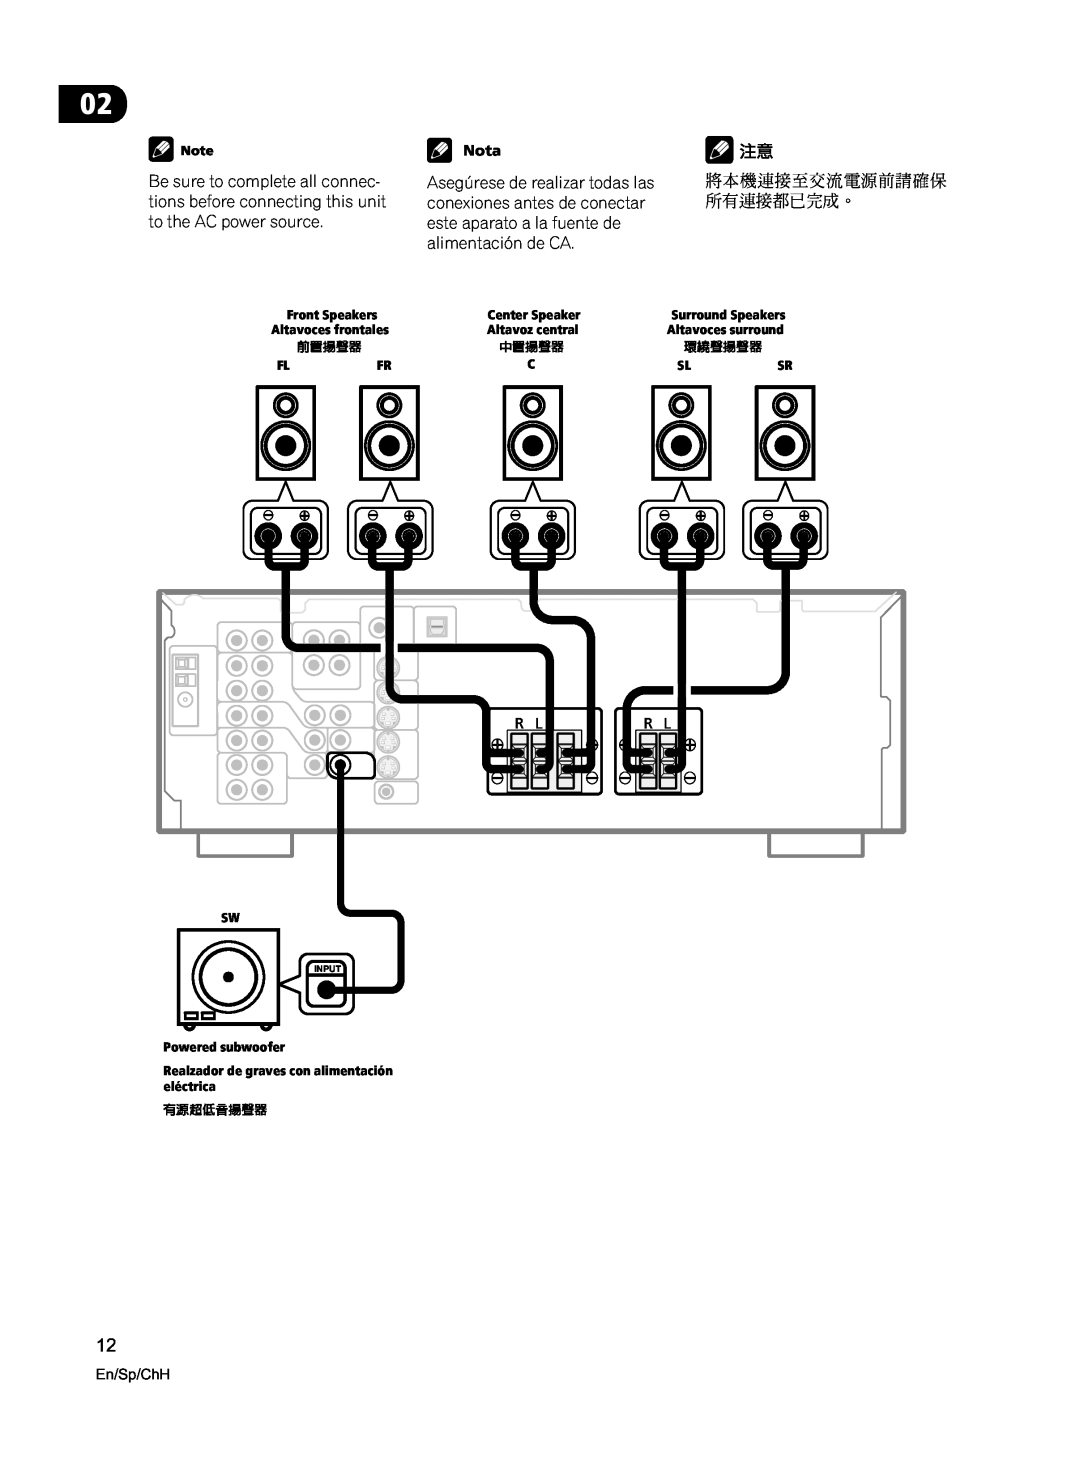 Pioneer VSX-D512-K manual 將本機連接至交流電源前請確保 所有連接都已完成。, Nota, 前置揚聲器, 中置揚聲器, 環繞聲揚聲器, Powered subwoofer, 有源超低音揚聲器, Front Speakers 